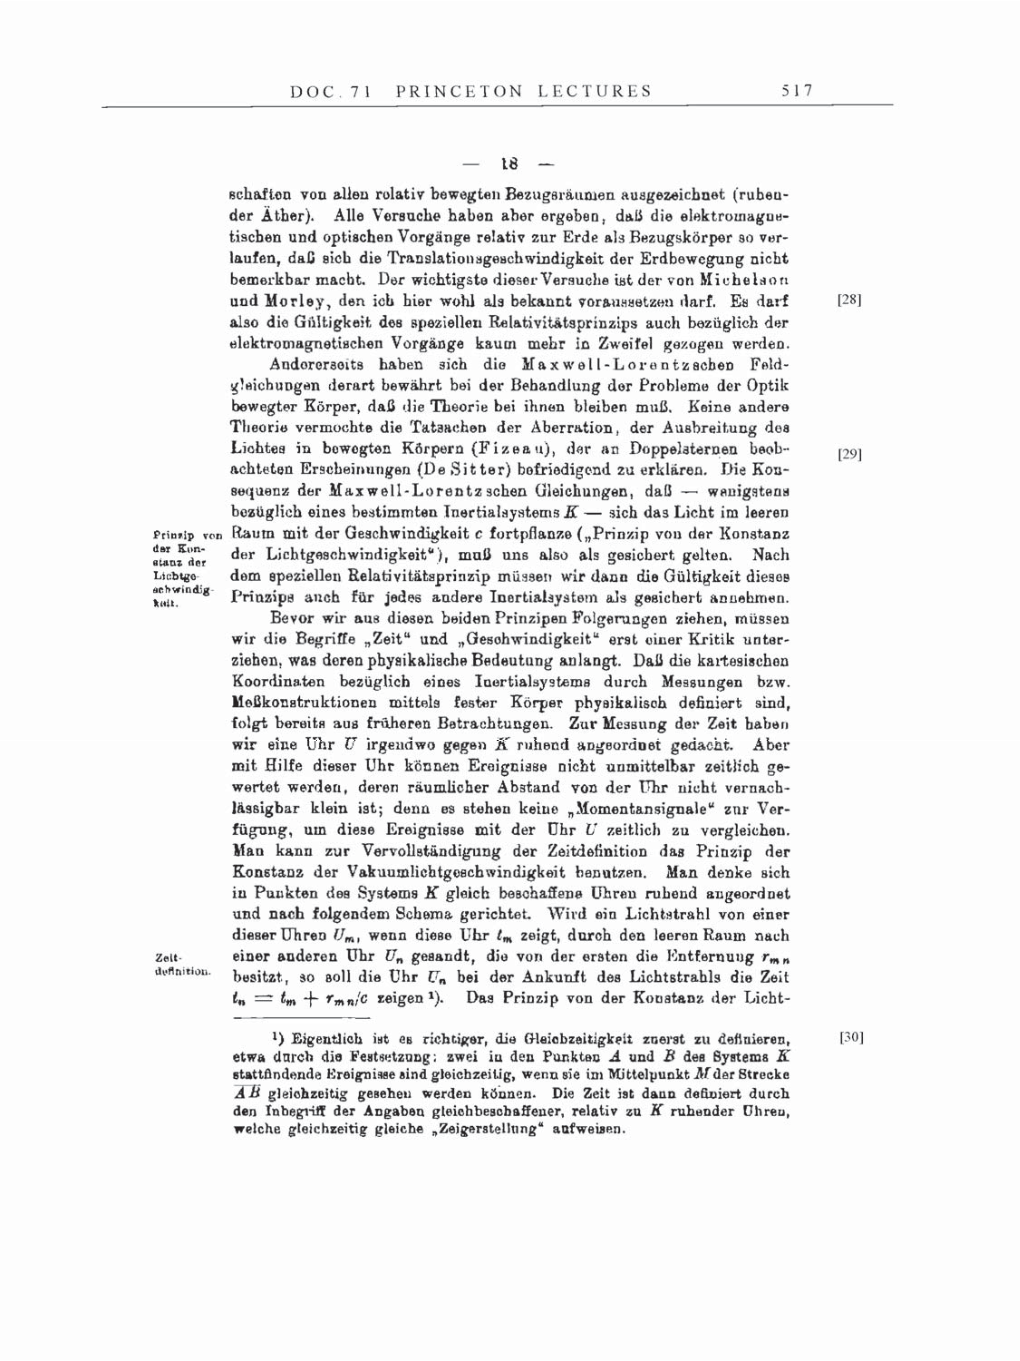 Volume 7: The Berlin Years: Writings, 1918-1921 page 517